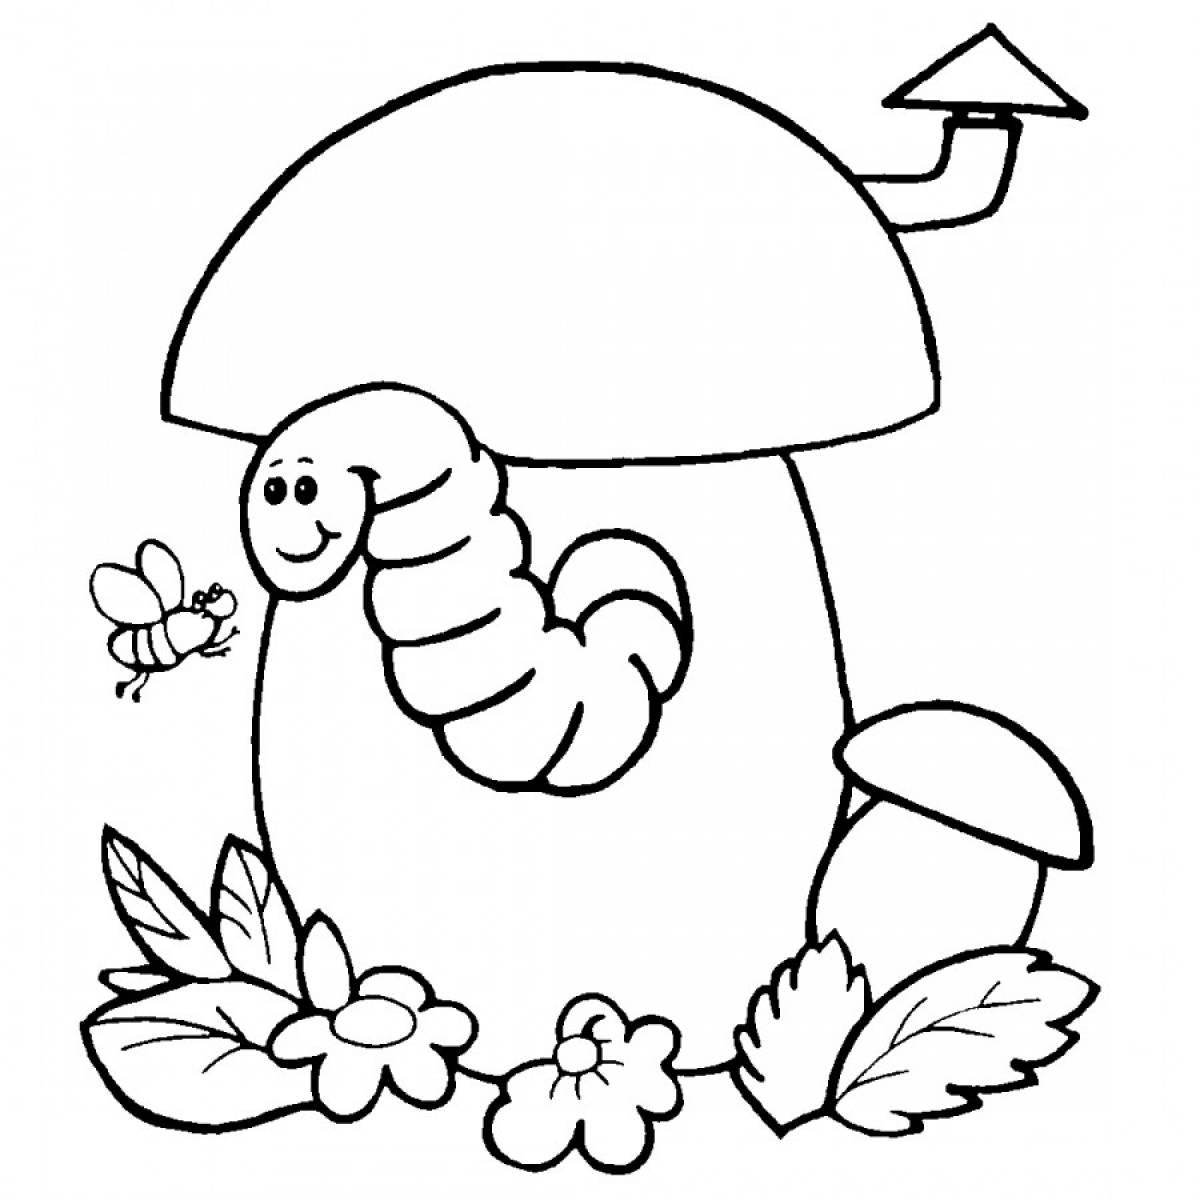 Mushroom and caterpillar